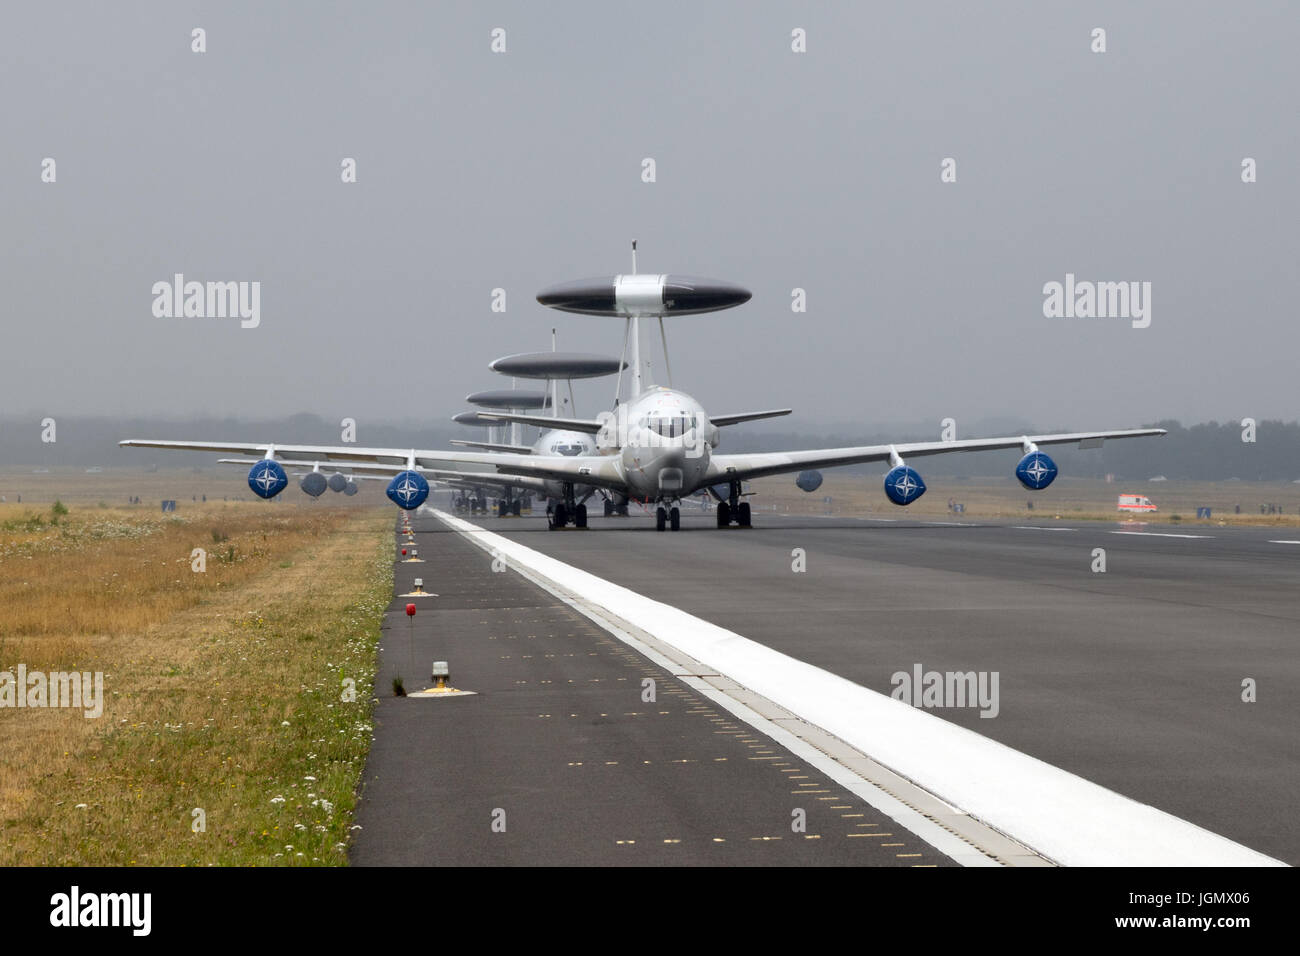 GEILENKIRCHEN, Germania - luglio 2, 2017: fila di Boeing NATO E-3 Sentry AWACS radar aerei sulla pista di Geilenkirchen airbase. Foto Stock